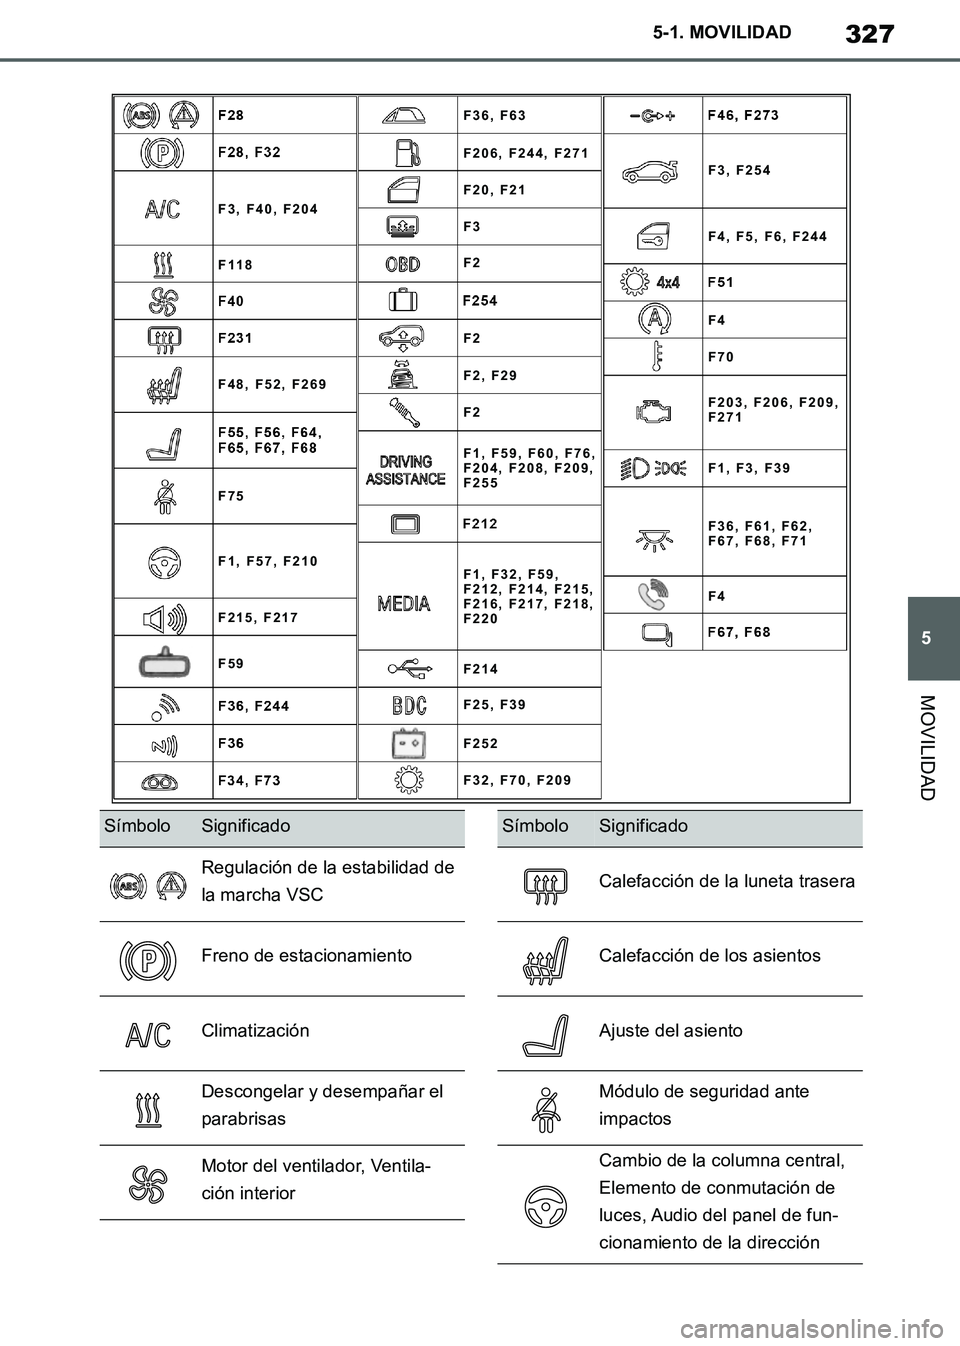 TOYOTA SUPRA 2019  Manuale de Empleo (in Spanish) 327
5
Supra Owners Manual_ES
5-1. MOVILIDAD
MOVILIDAD
F1, F32, F59,
F212, F214, F215,
F216, F217, F218,
F220 F1, F59, F60, F76,
F204, F208, F209,
F255
F36, F61, F62,
F67, F68, F71 F36, F63
F206, F244